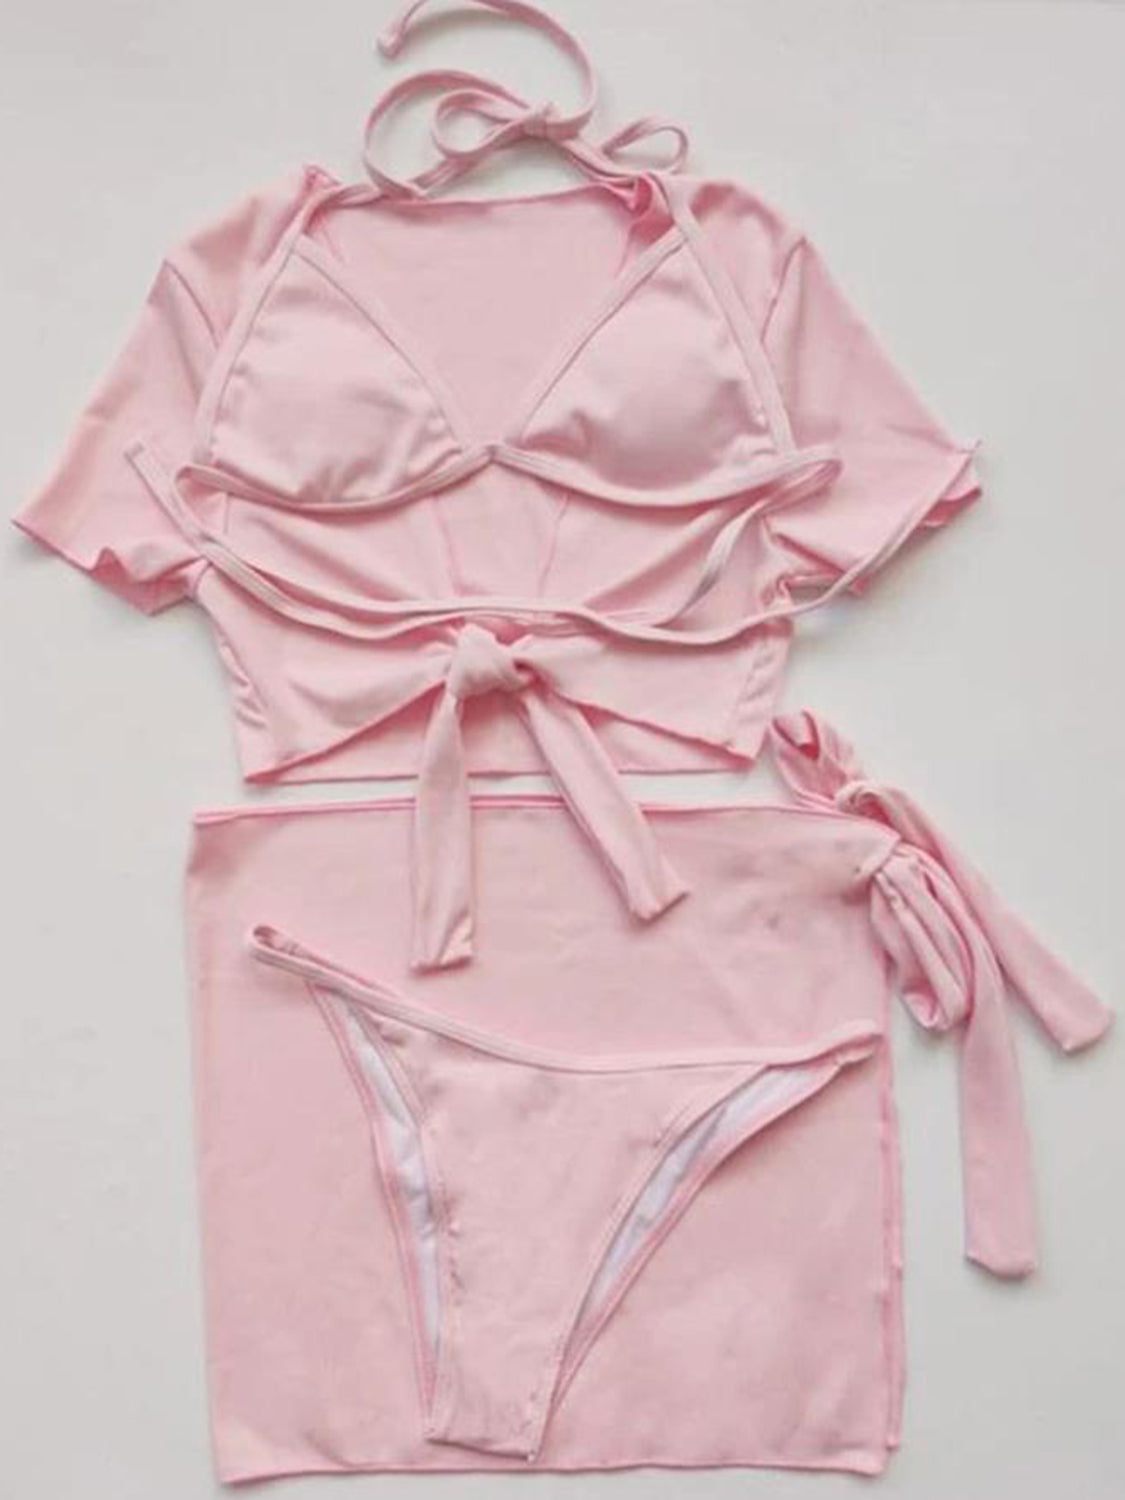 TEEK - Halter Neck Bikini and Cover Up Four-Piece Swim Set SWIMWEAR TEEK Trend Blush Pink S 